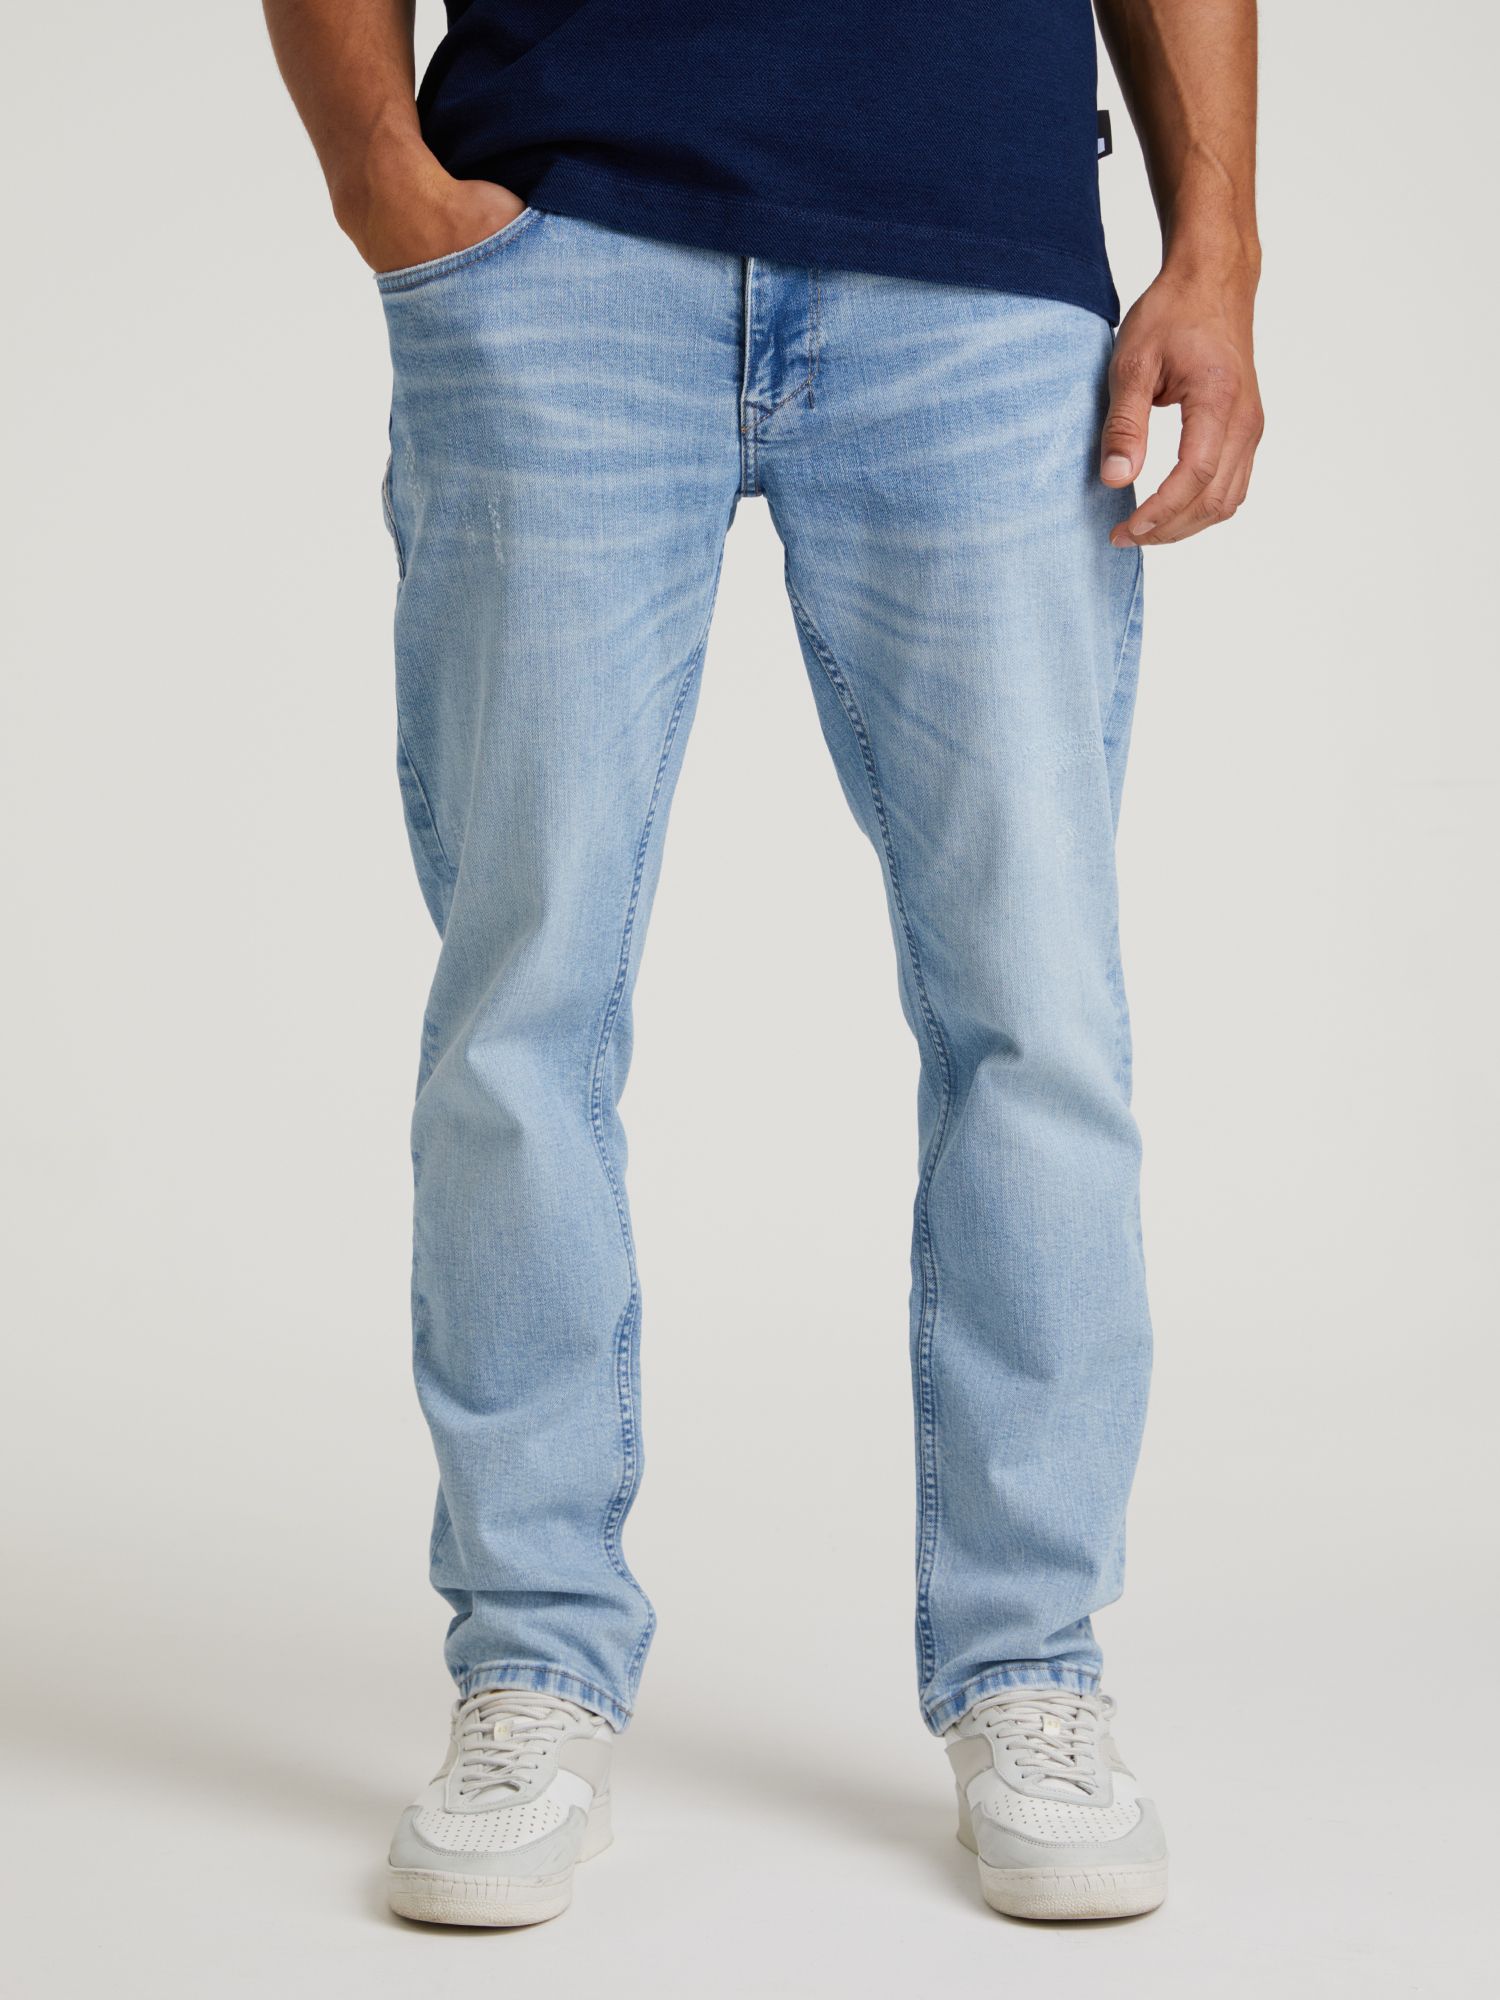 Kapital men's 5-pocket dark blue jeans SLP021